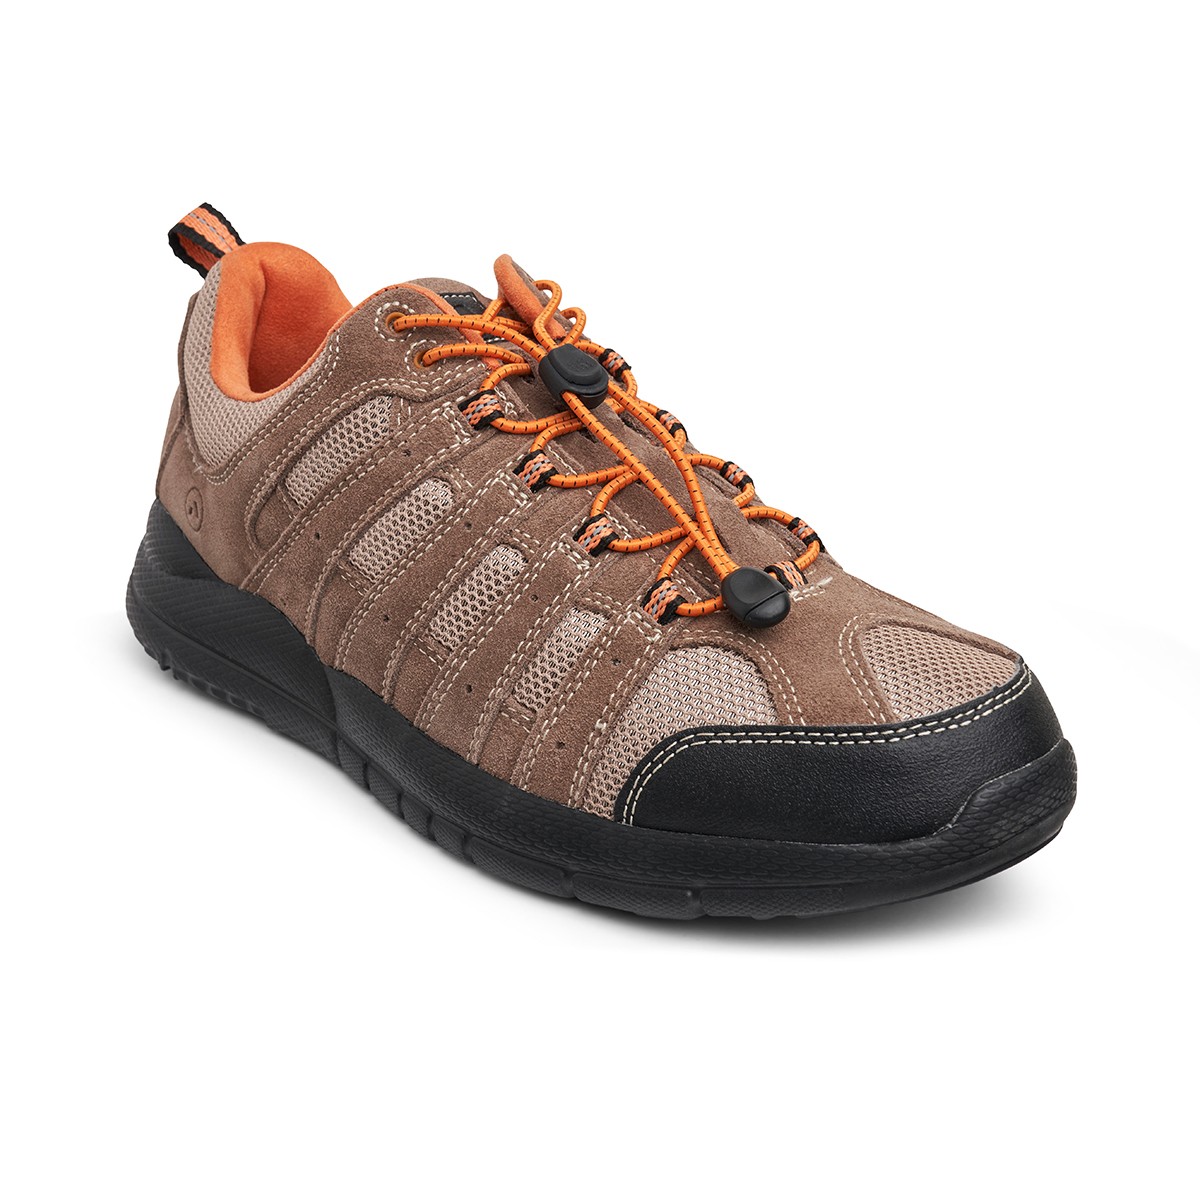 Asics Gel-Kayano 25 Re Running Shoes (Stone Grey, Black) Stone Grey, Black  11 in Varanasi at best price by Kalia Sports - Justdial